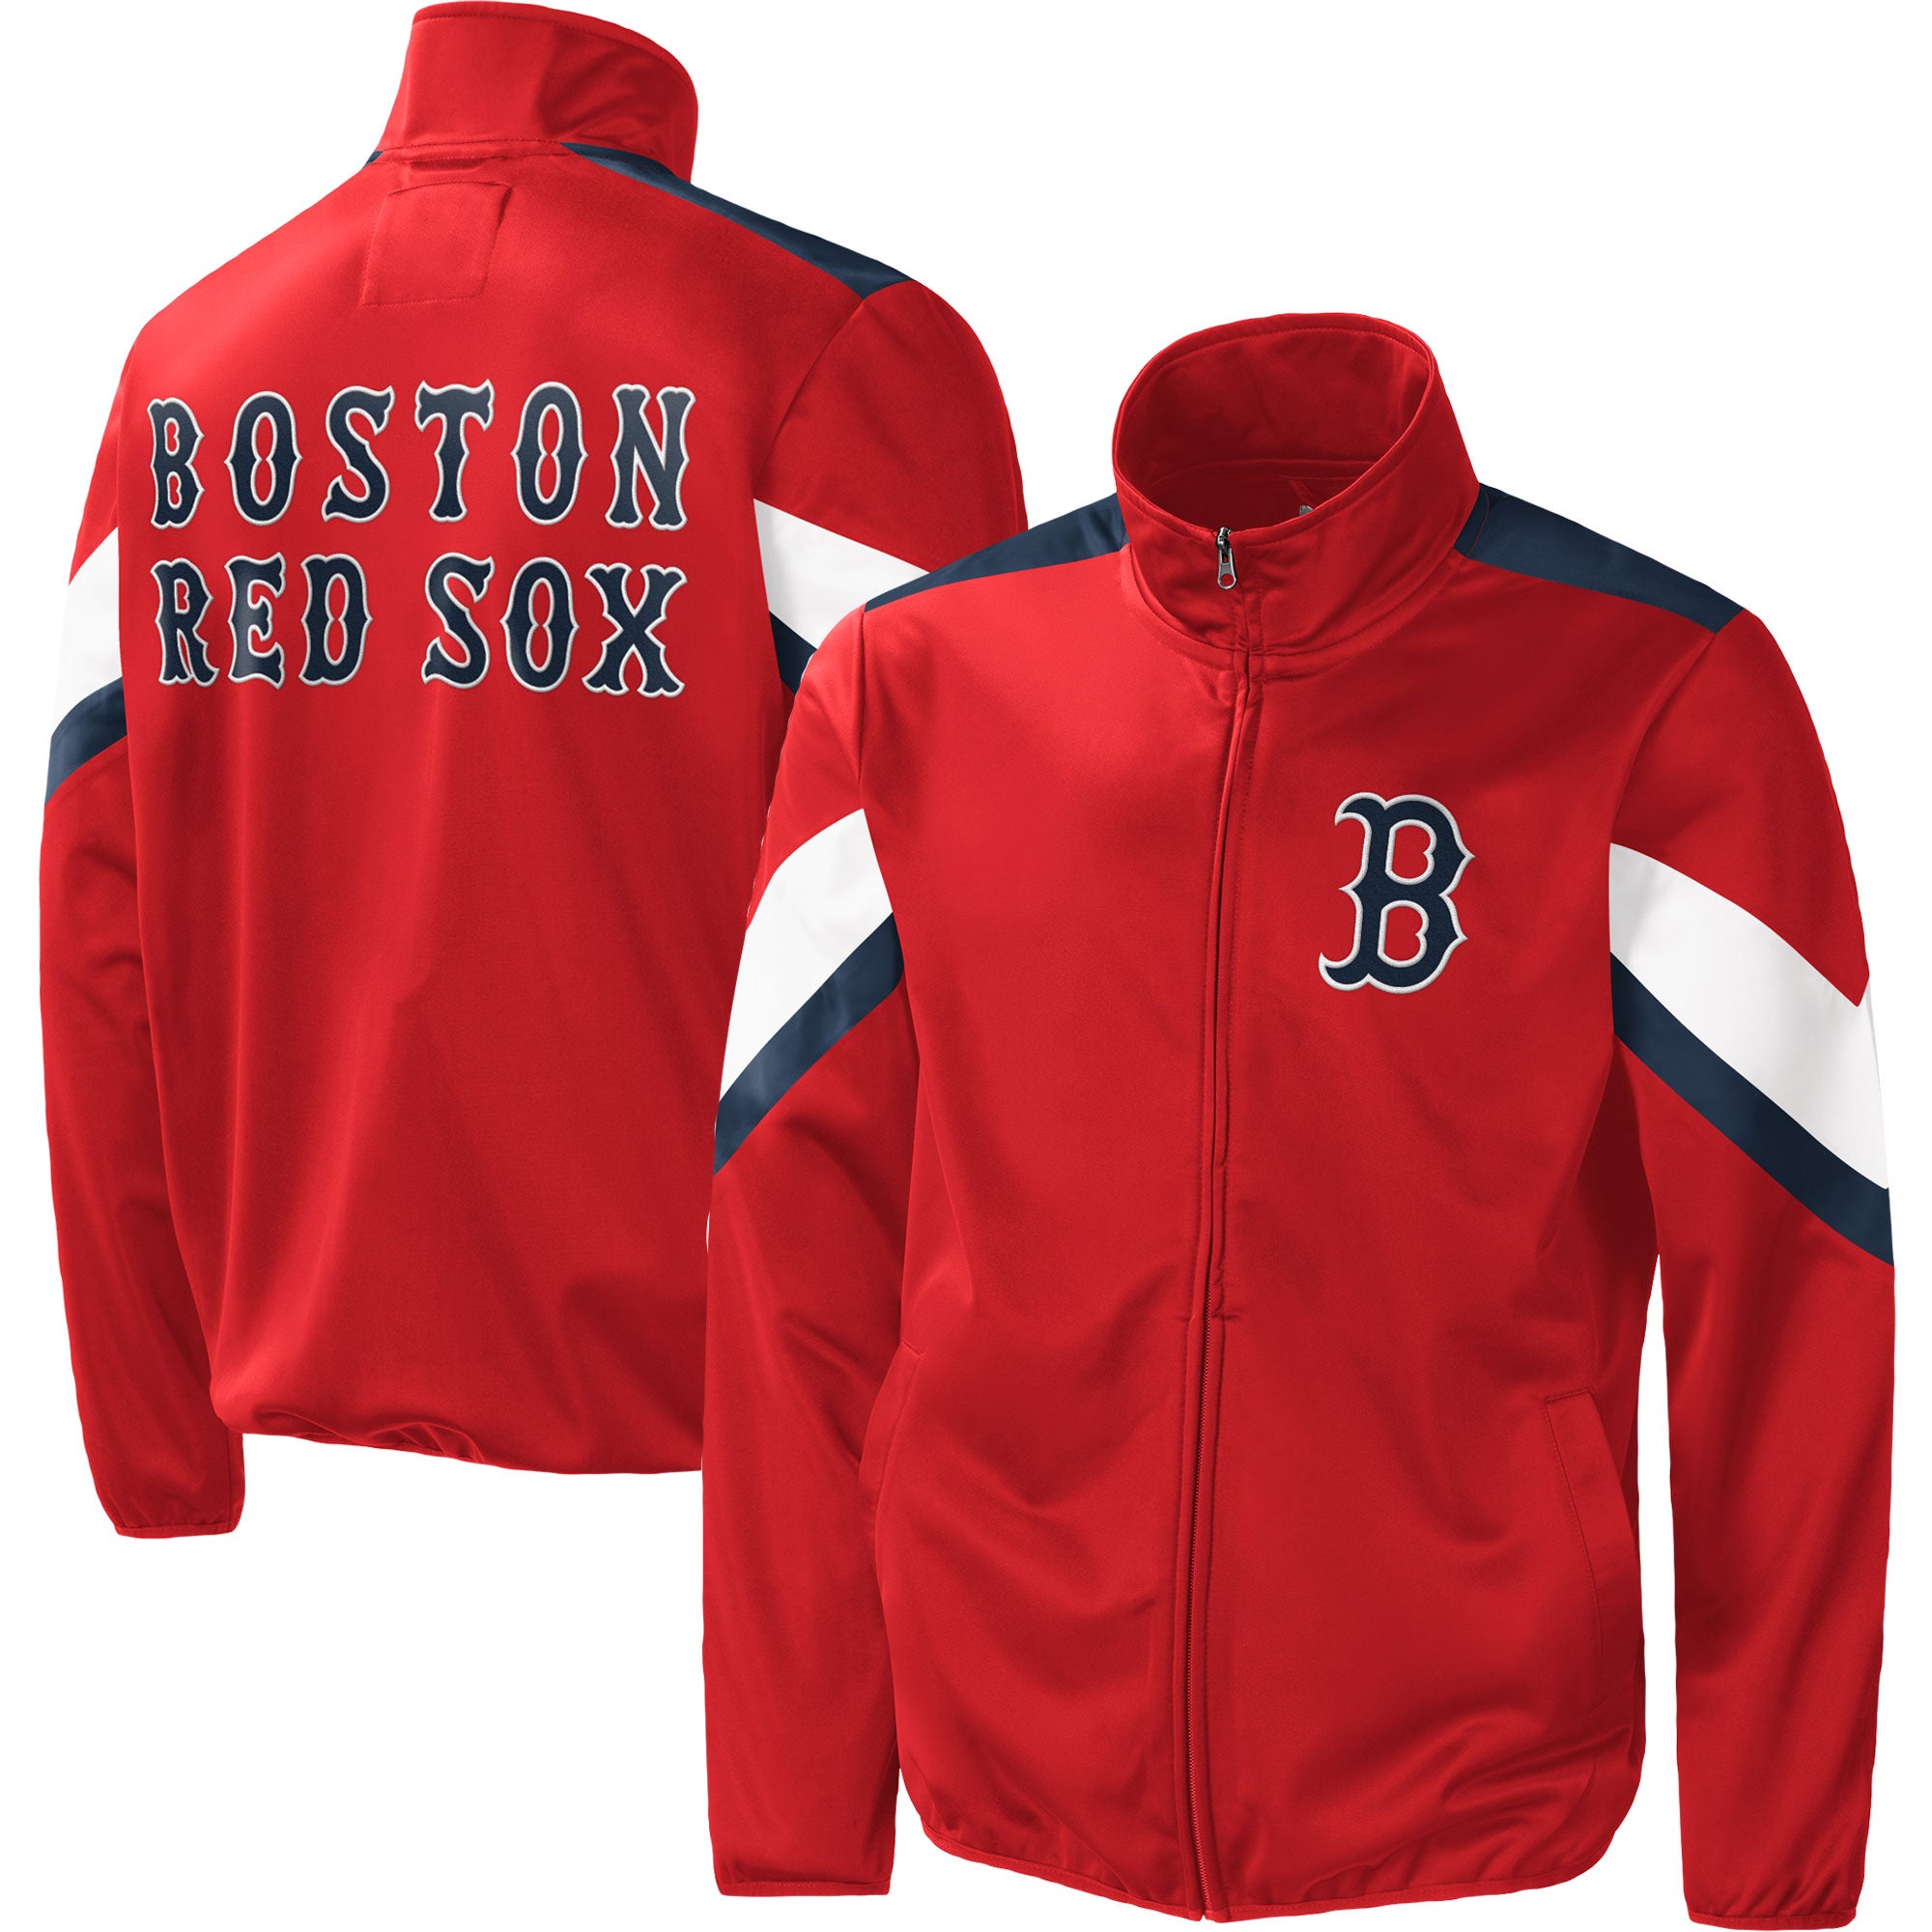 G-III Sports by Carl Banks Red Sox Earned Run Full-Zip Jacket